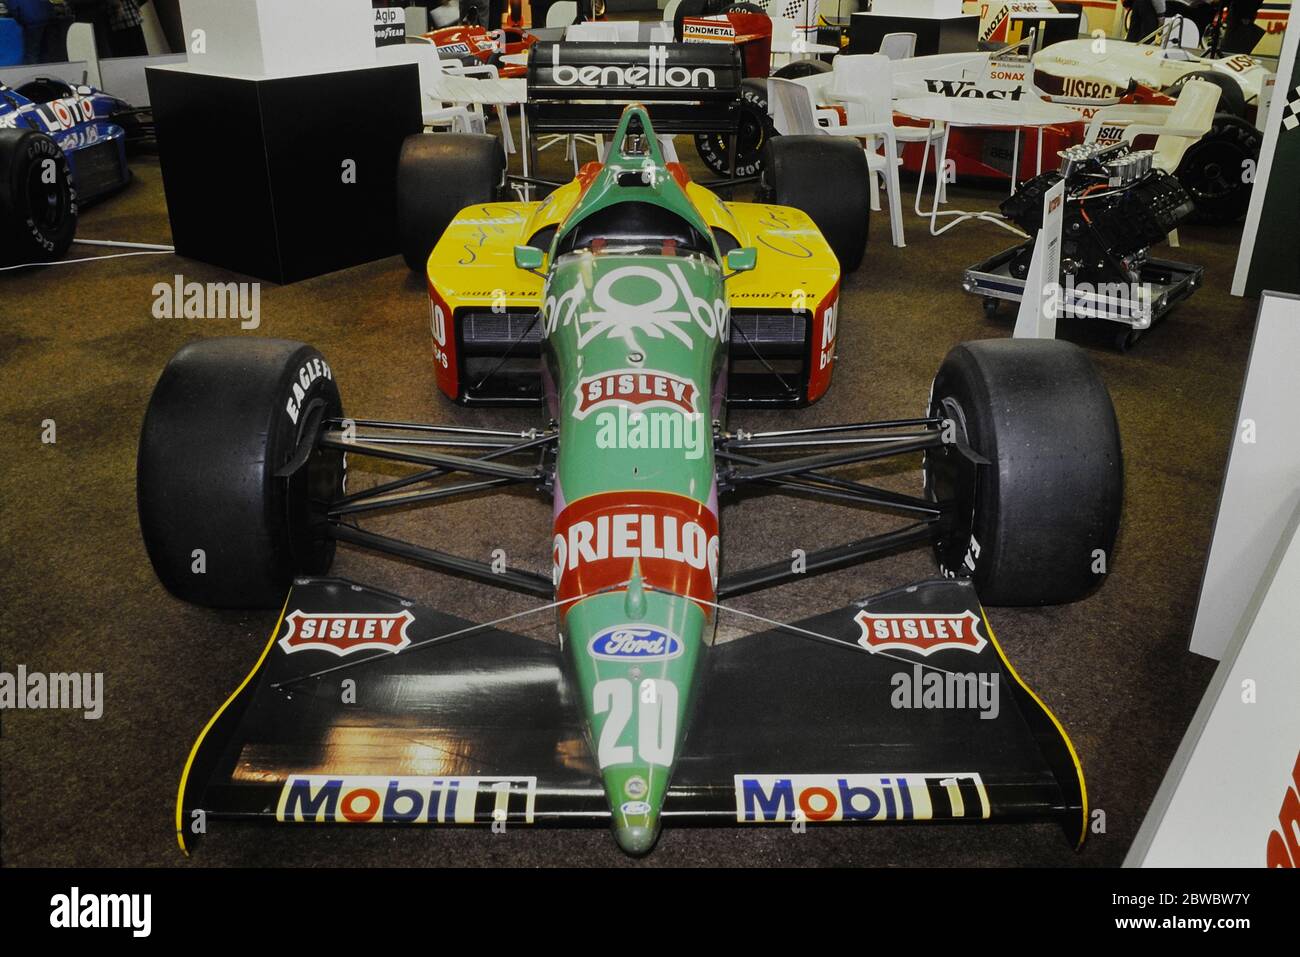 Benetton B187 Formula One car on display at THE RACING CAR SHOW 1989 SHOW. Olympia 2, London, England, UK, GB. 4-8th January 1989 Stock Photo